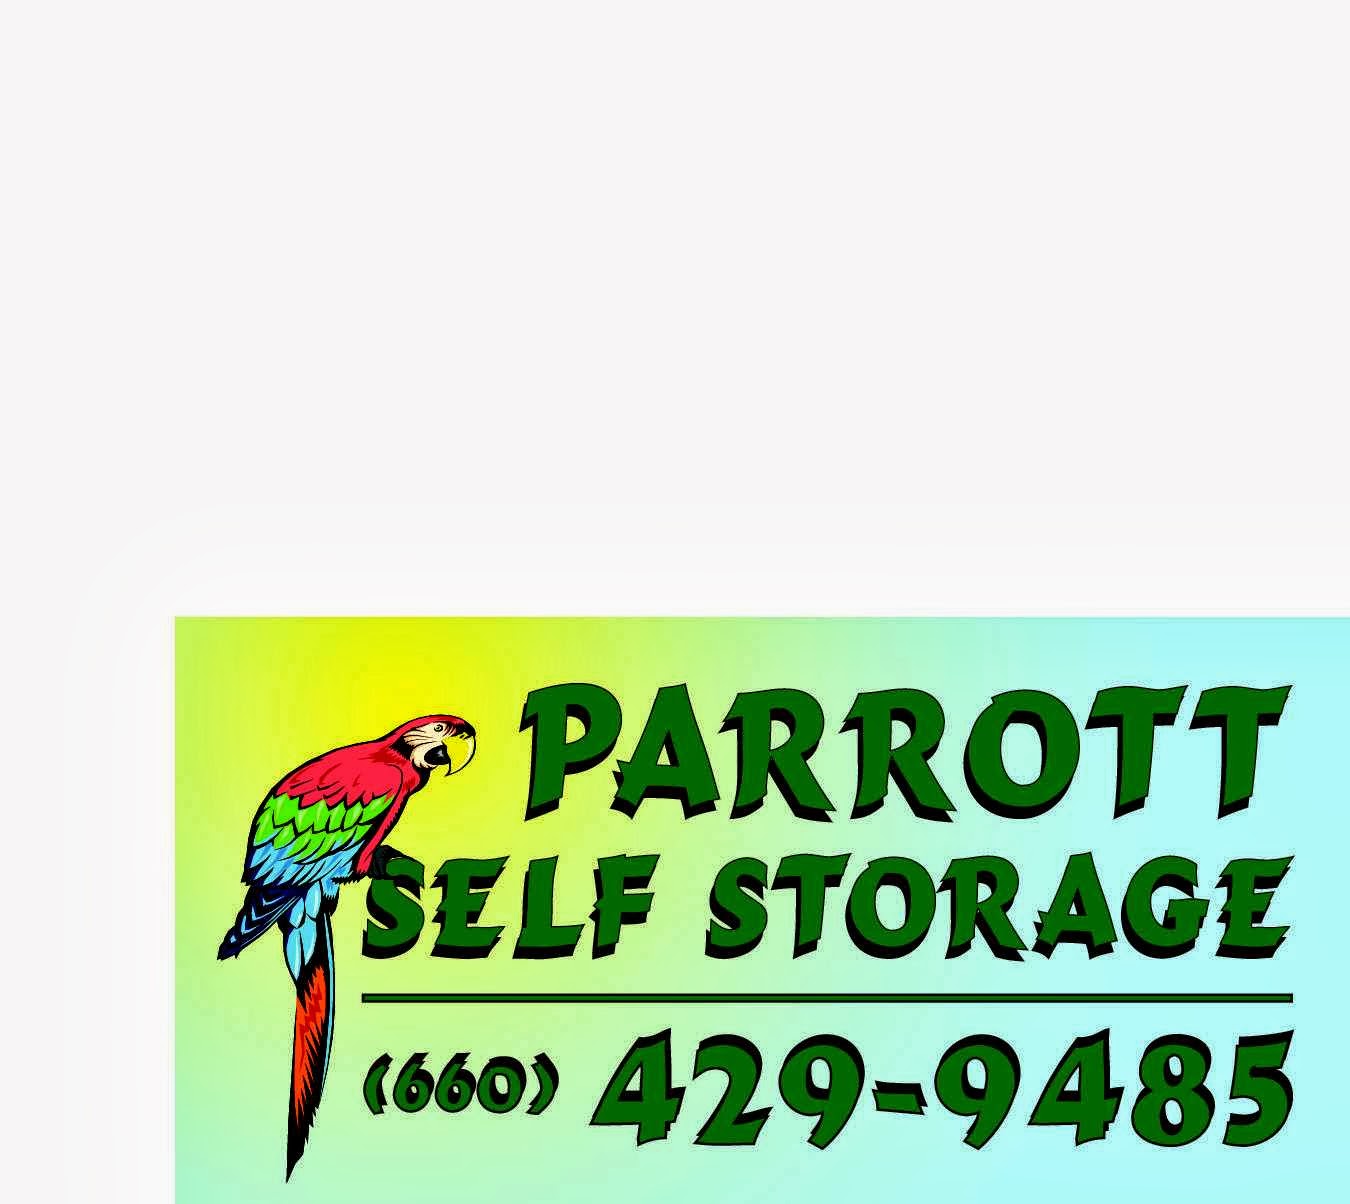 Parrott Self Storage